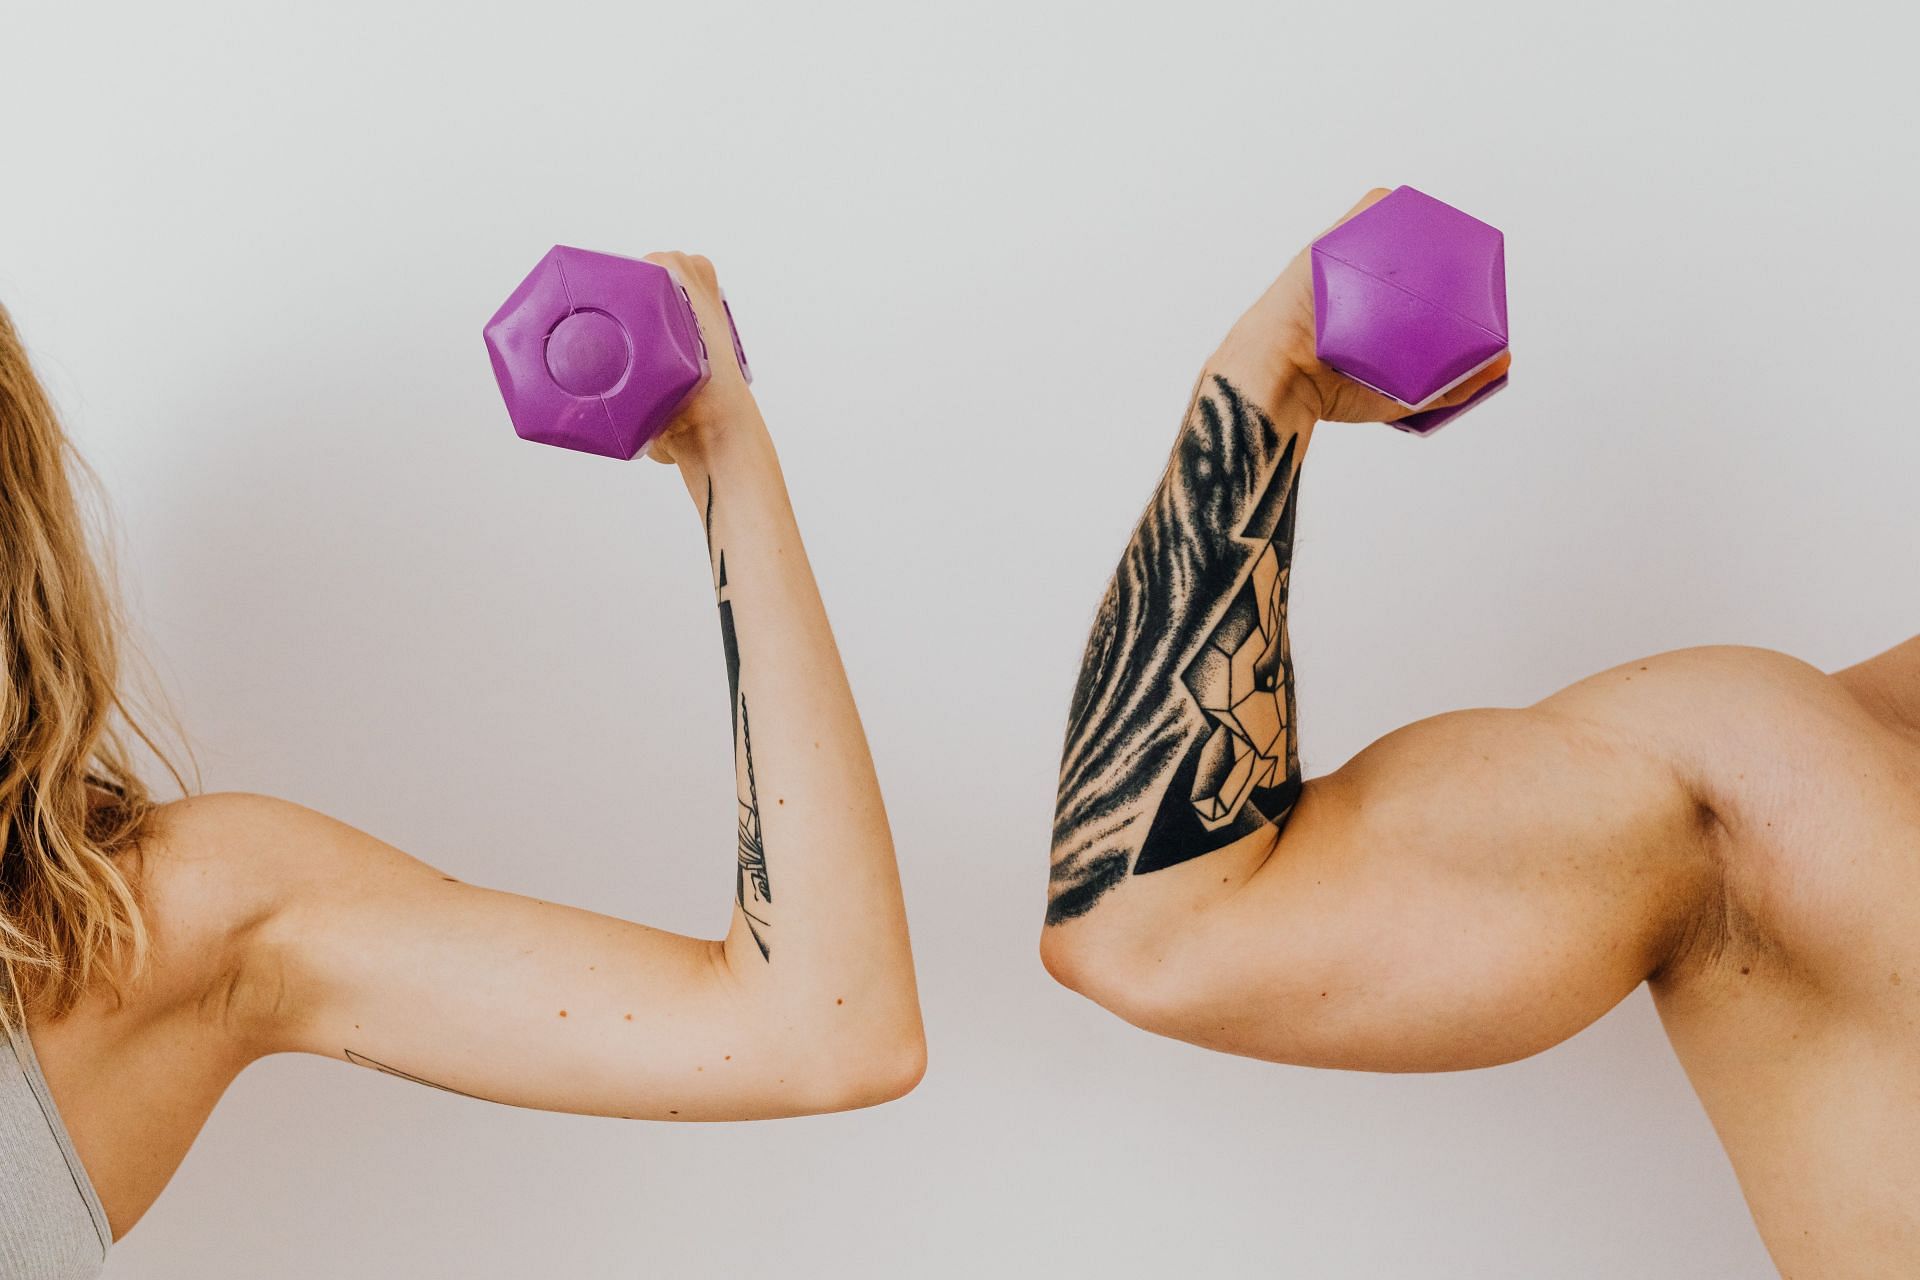 Dumbbell exercises isolate and focus on triceps. (Image via Pexels/ Karolina Grabowska)